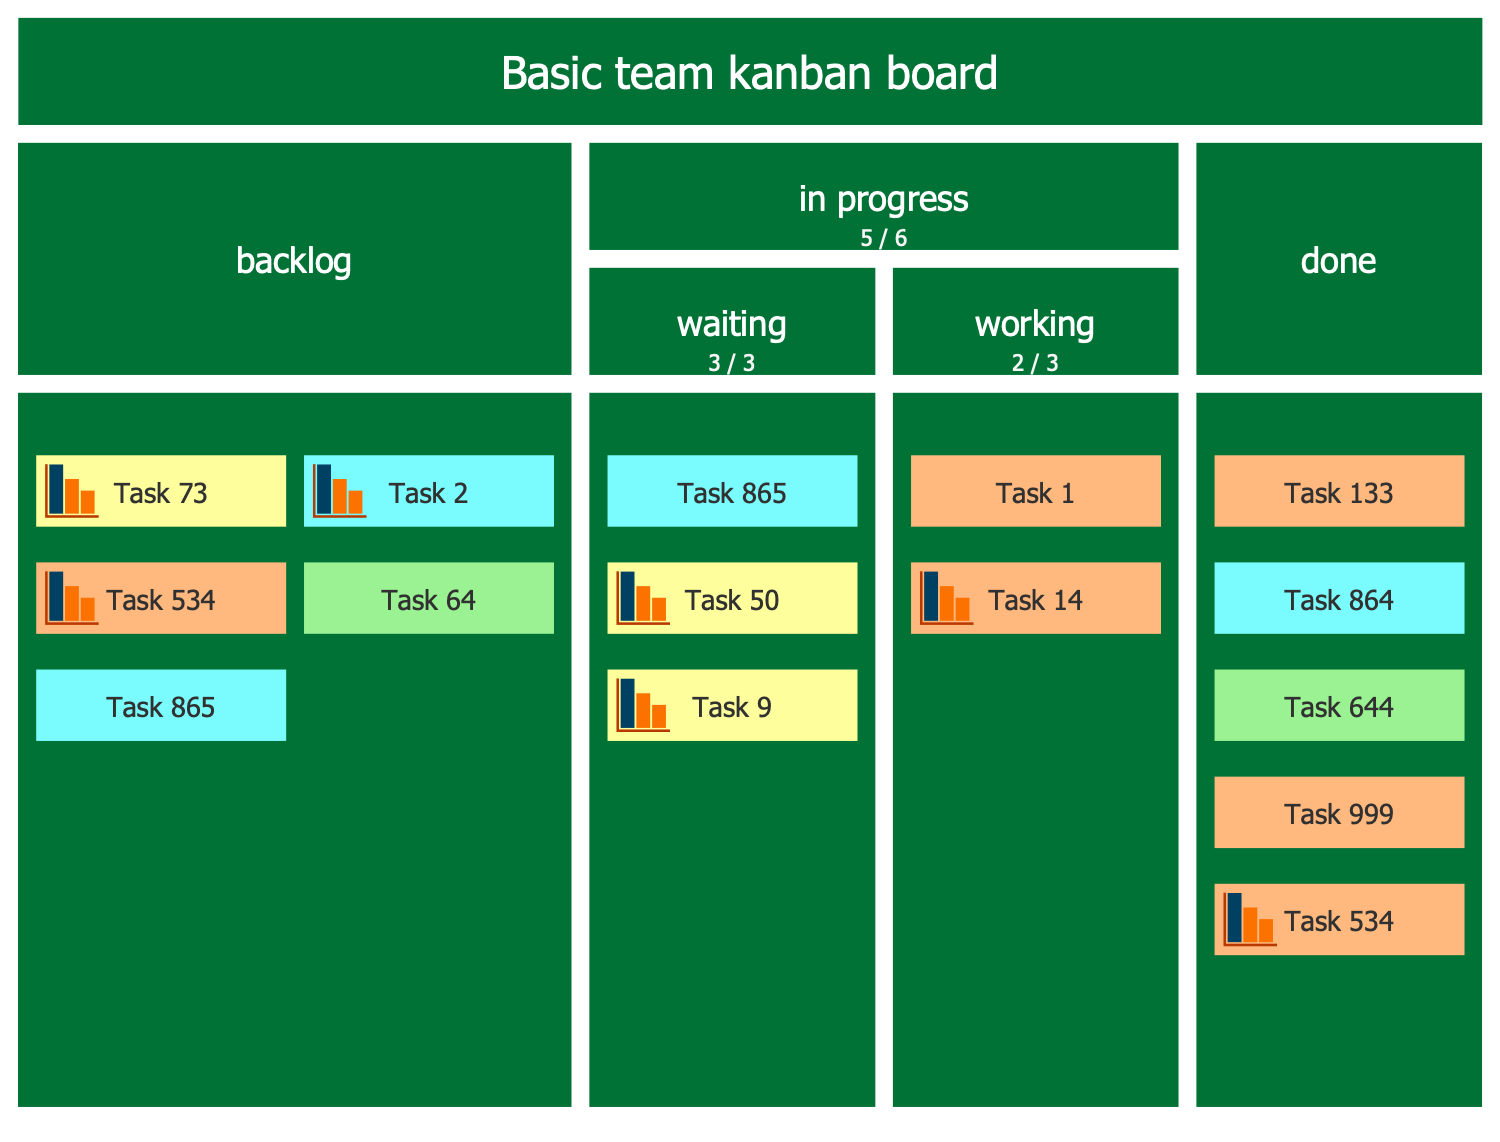 Basic Team Kanban Board